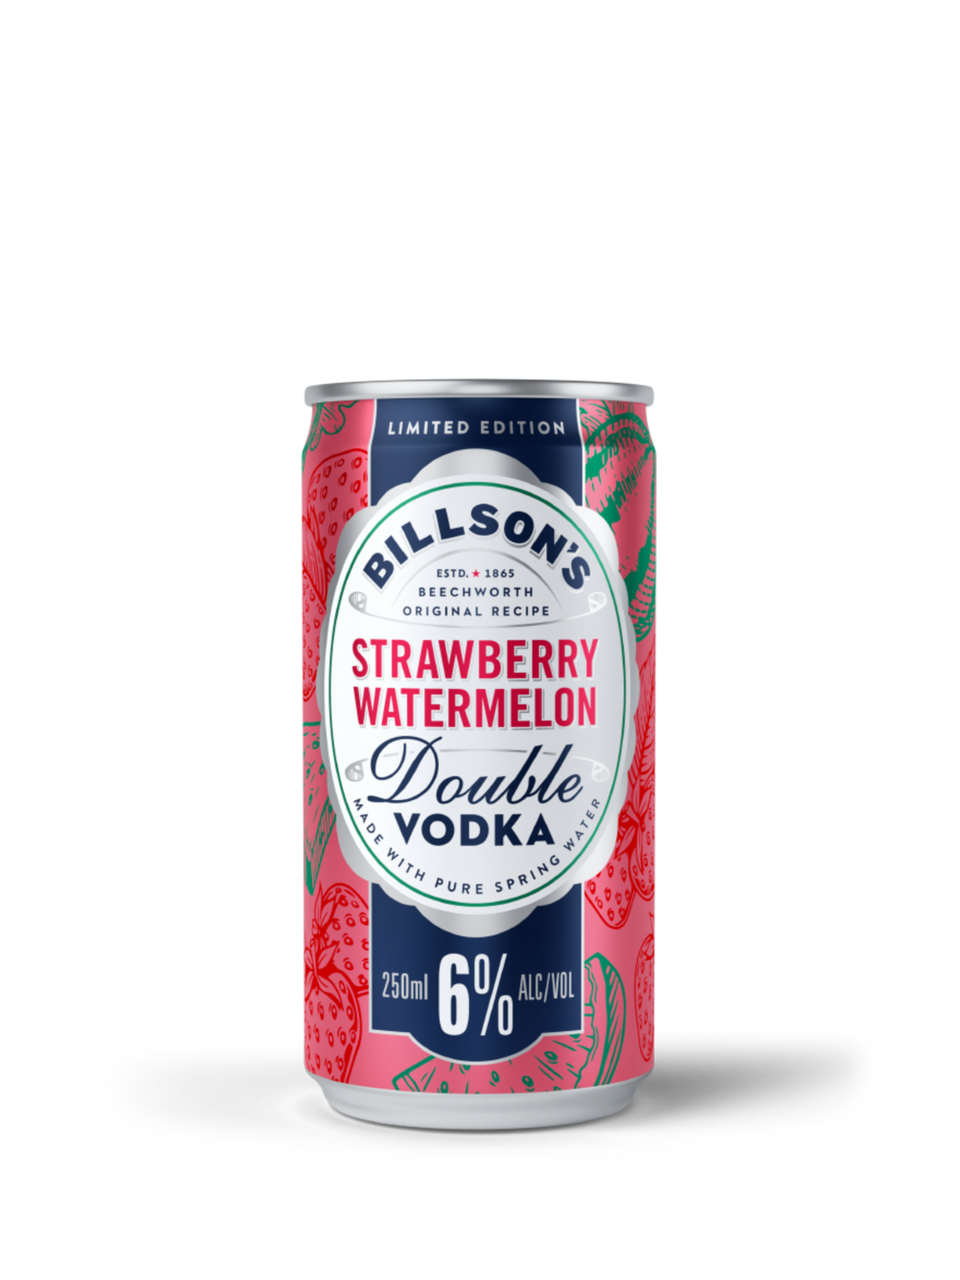 Billson's Double Vodka with Strawberry Watermelon